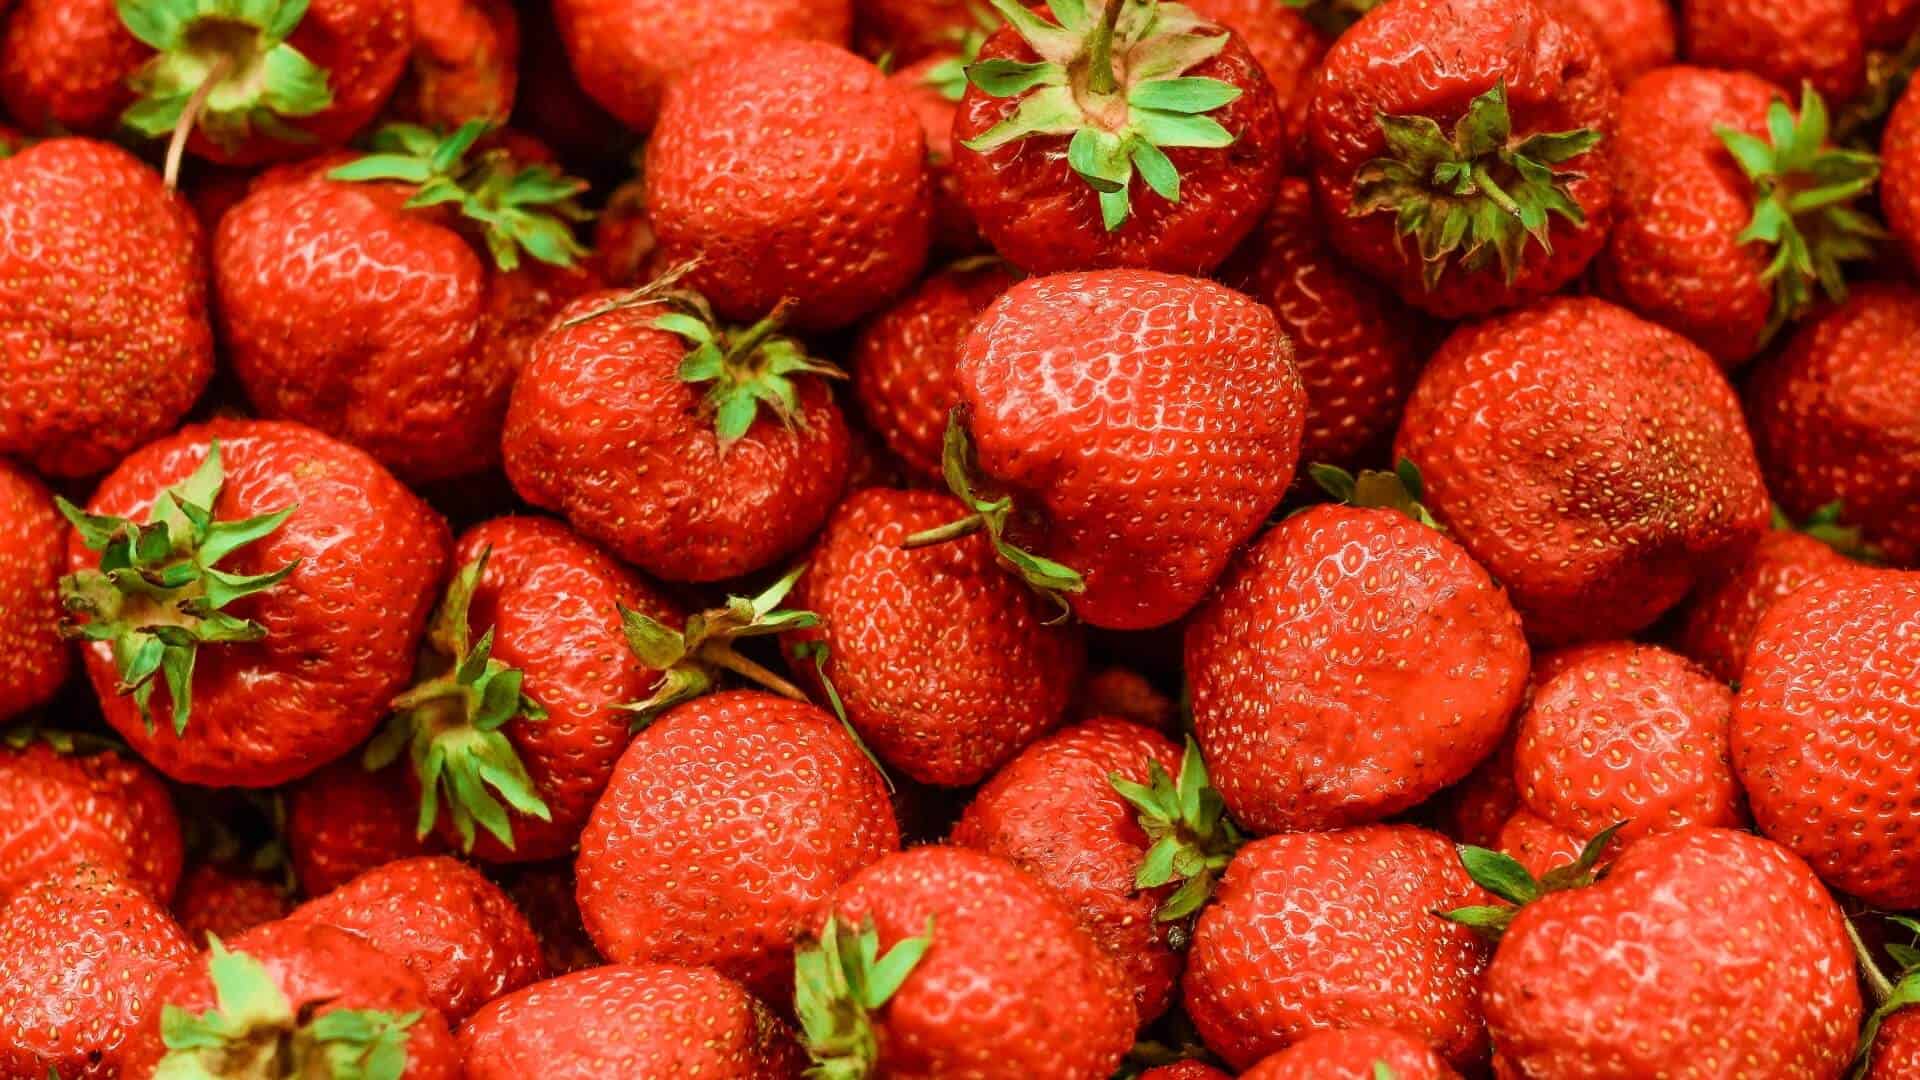 strawberries background image